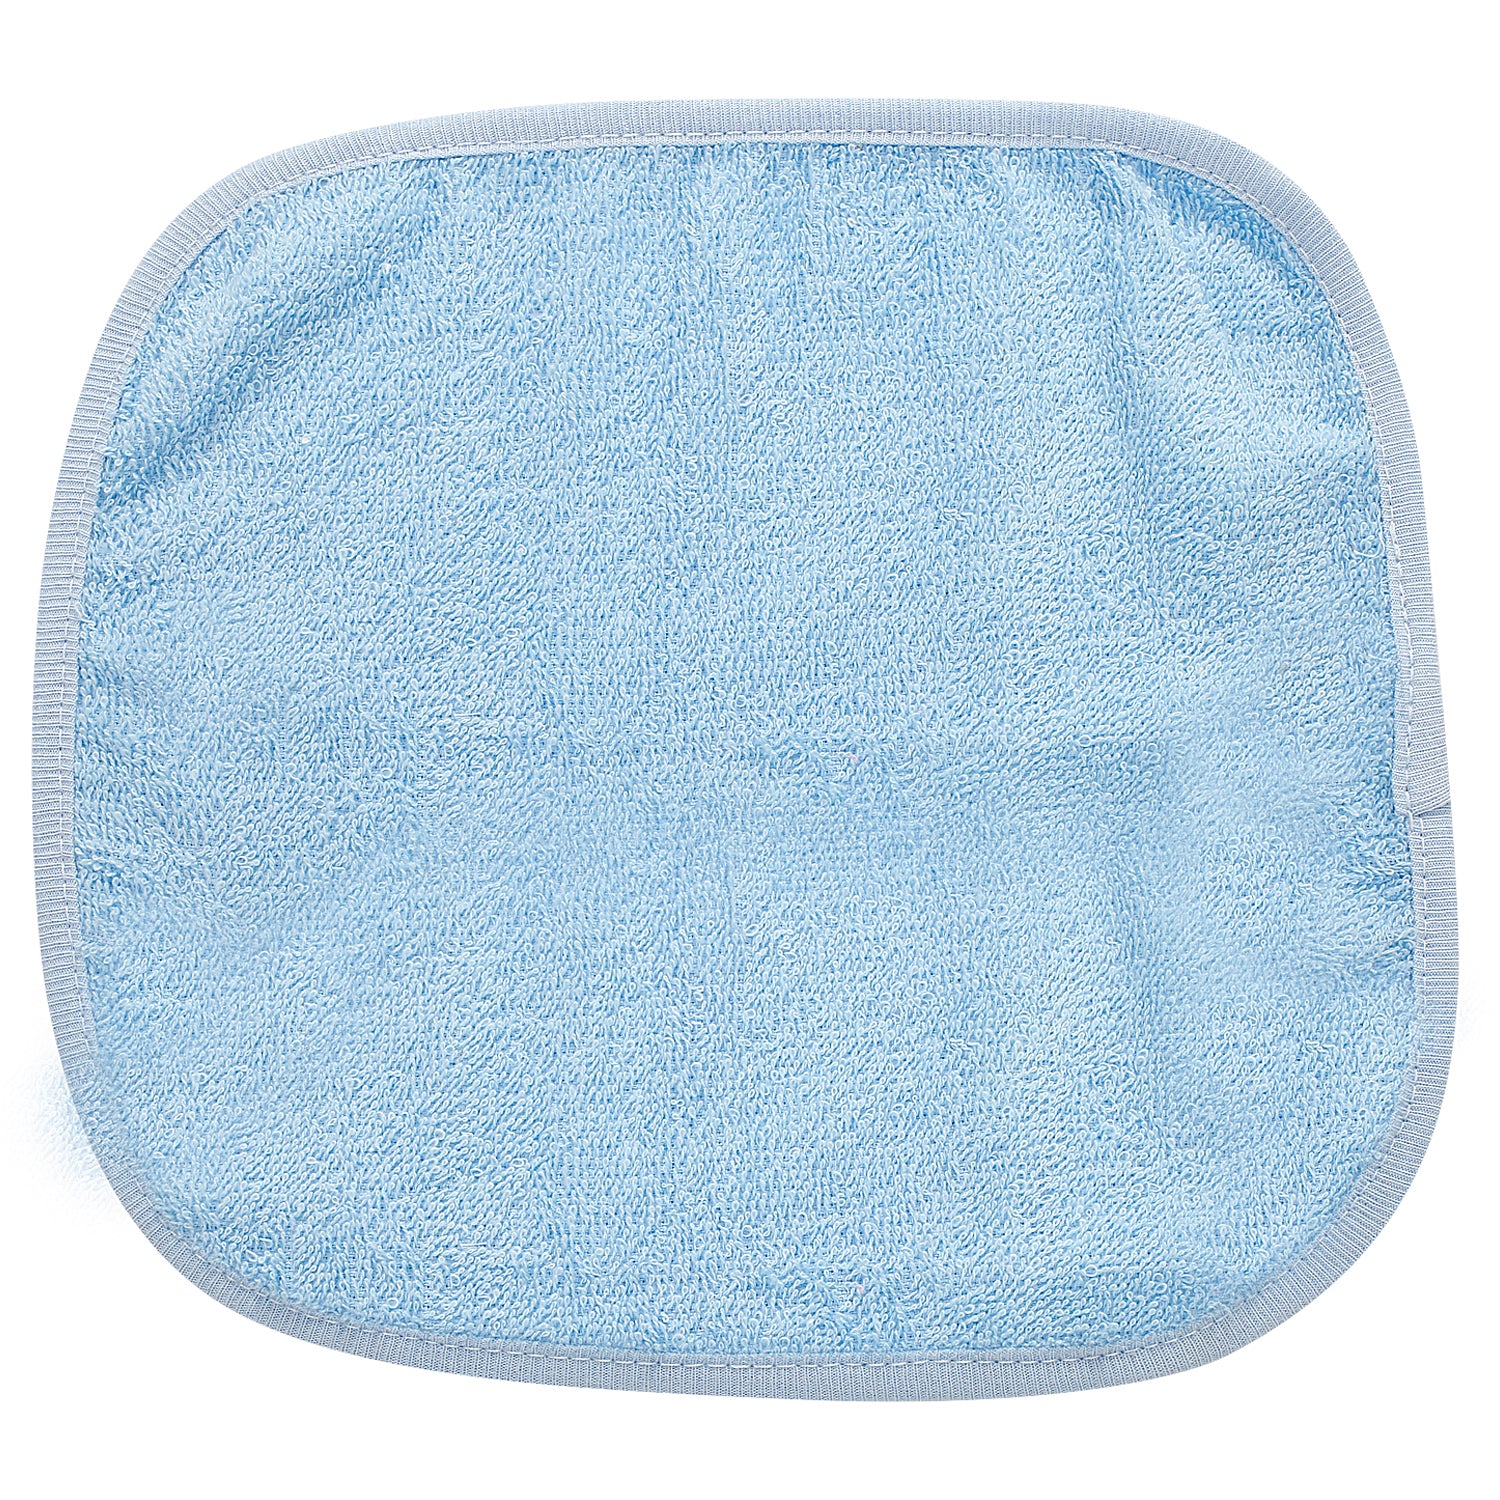 Baby Moo Flying Blue 4 Pk Wash Cloth